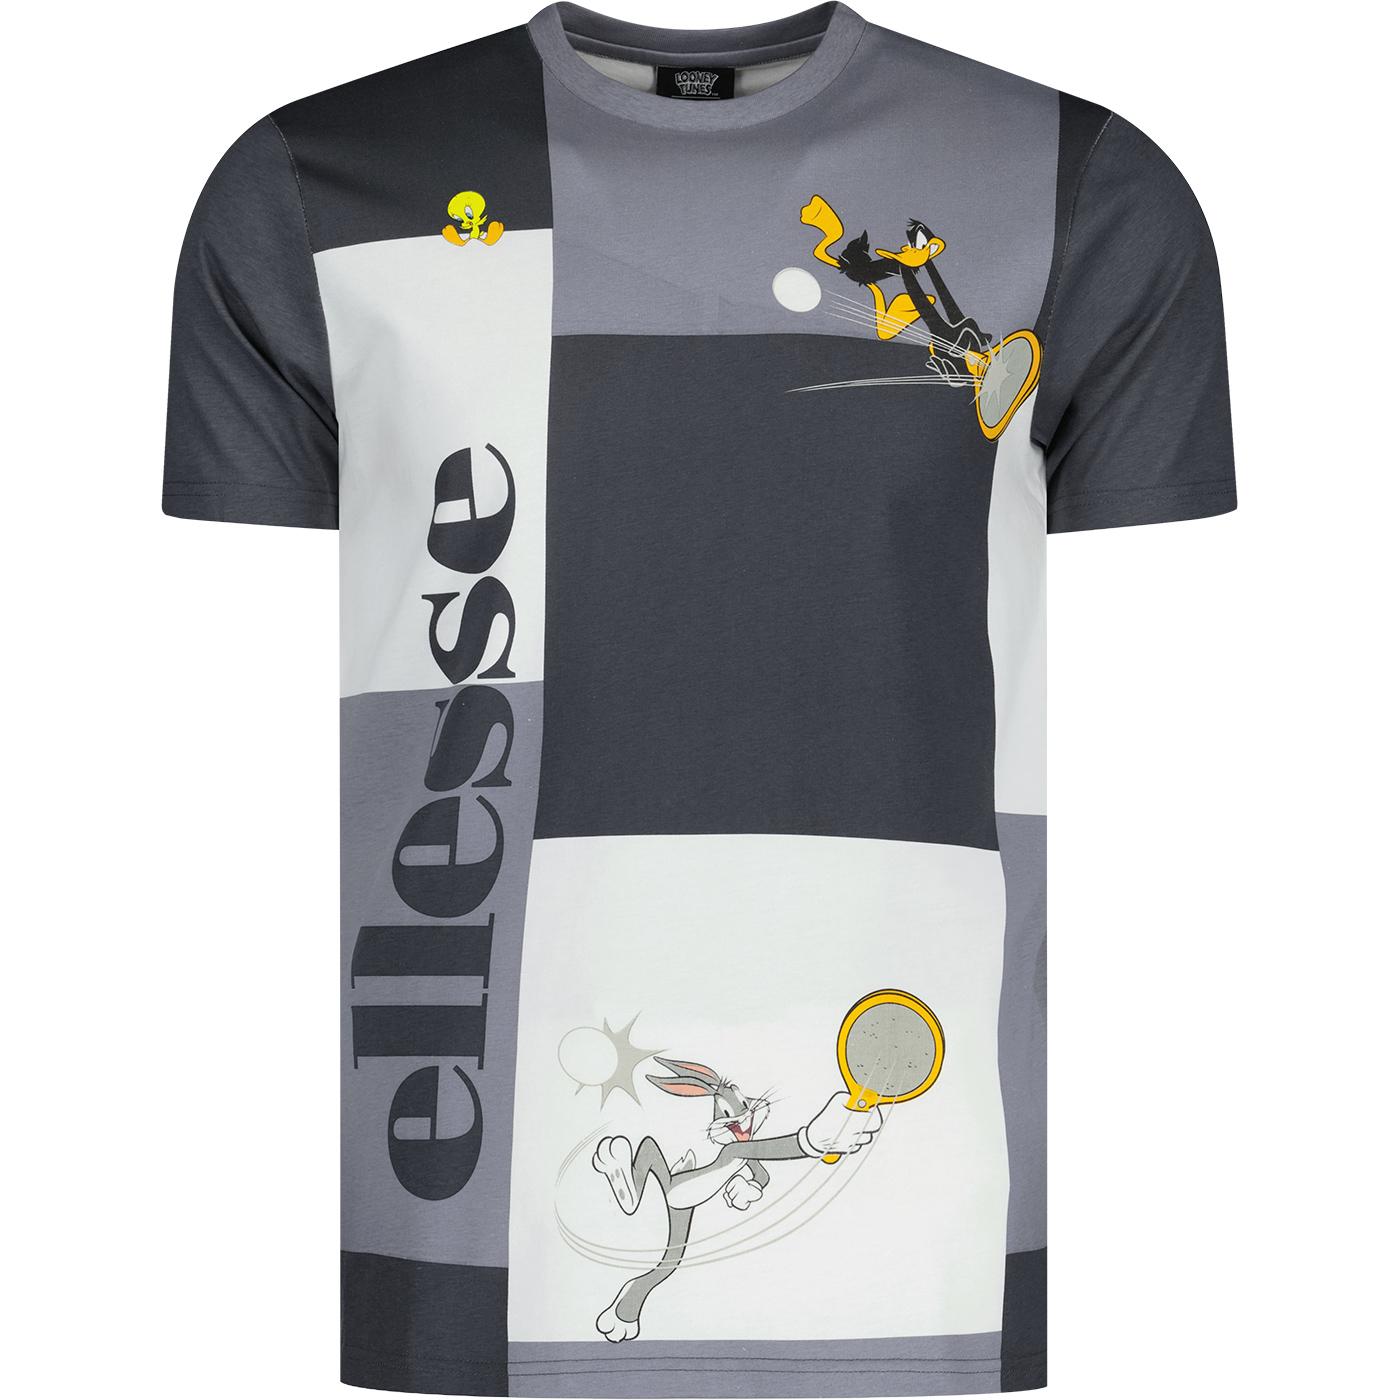 Sidalo ELLESSE x LOONEY TUNES Daffy Duck T-shirt